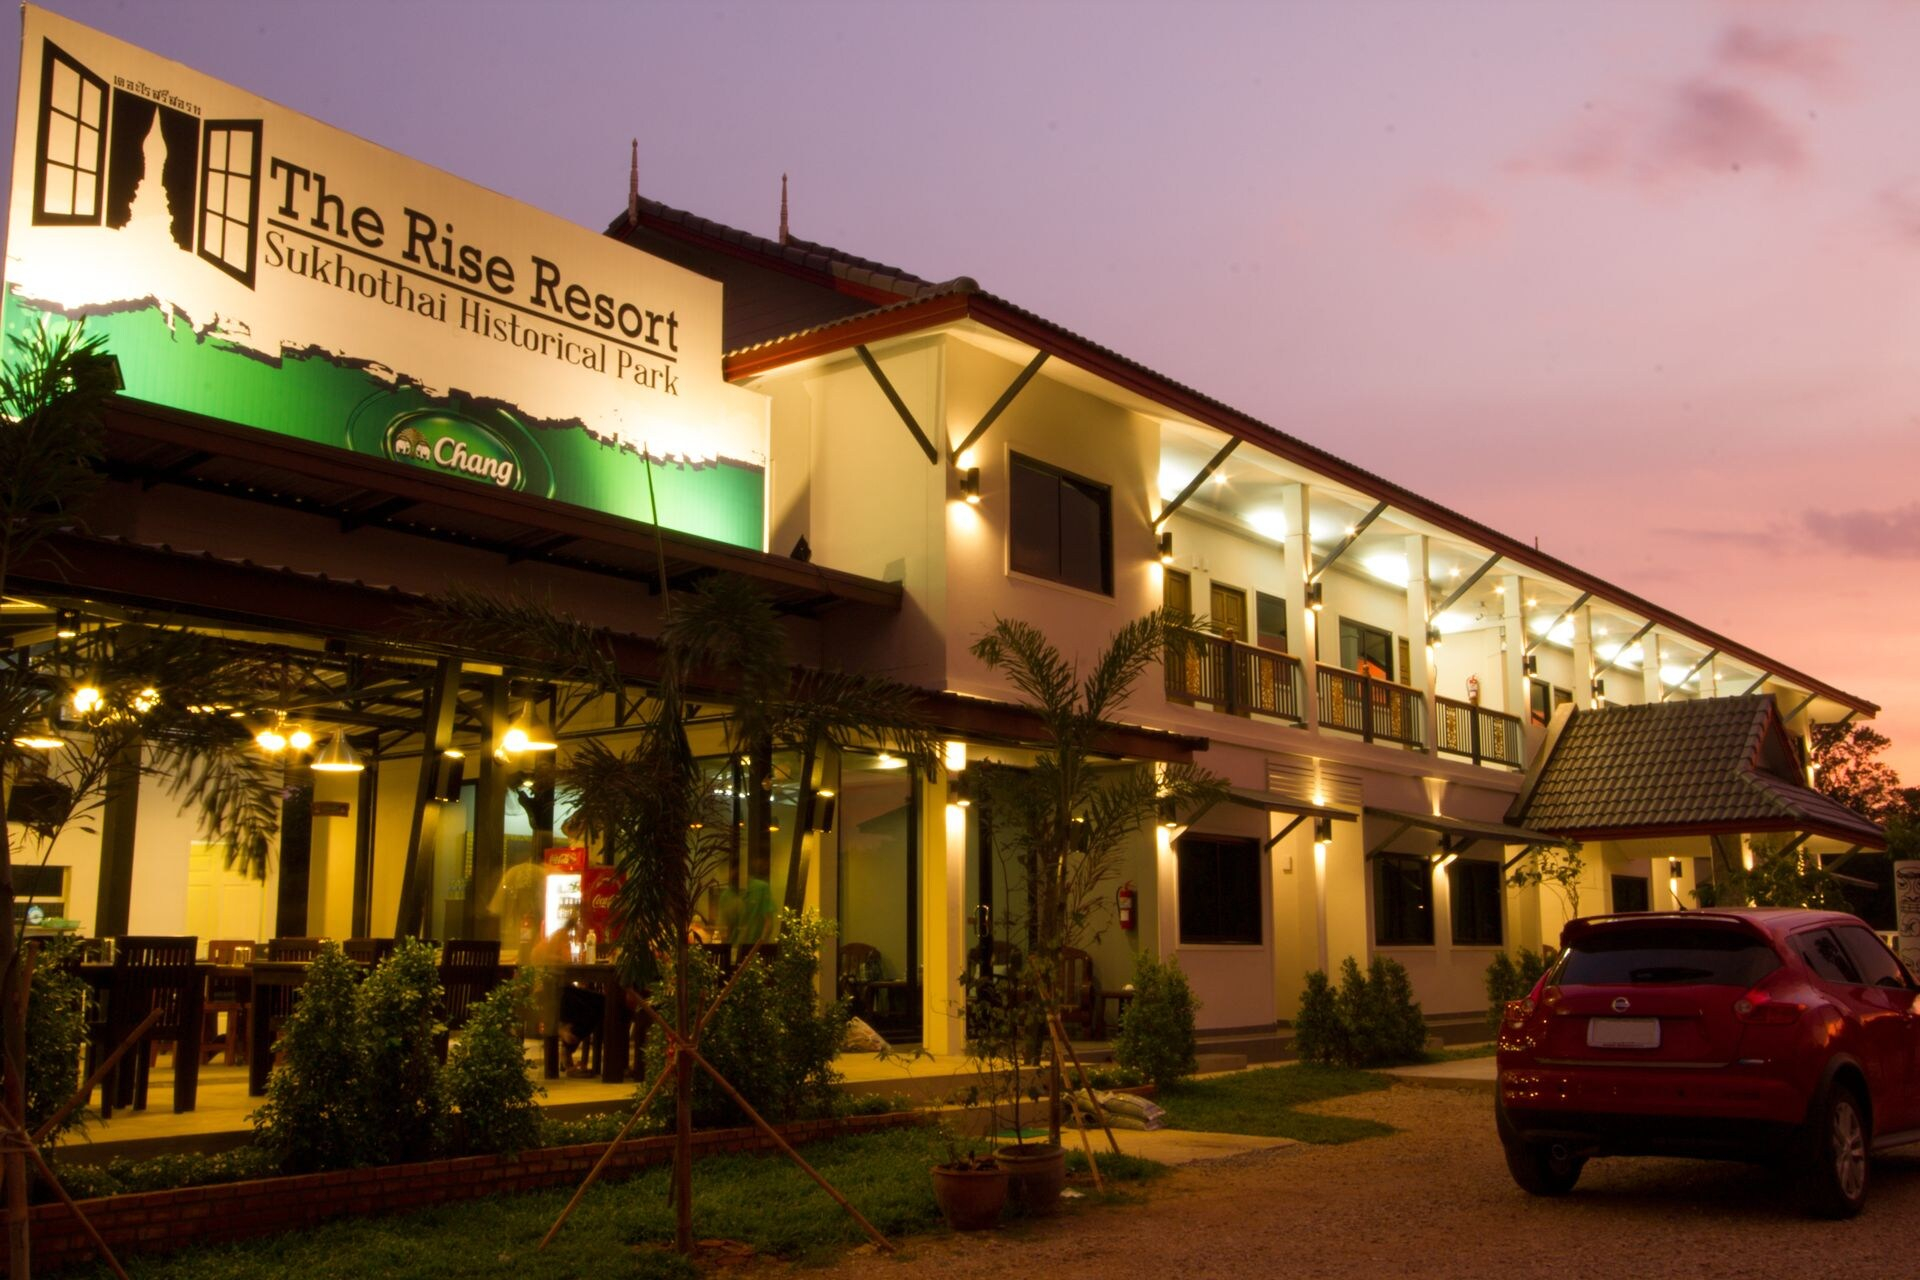 Exterior & Views, The Rise Resort, Muang Sukhothai